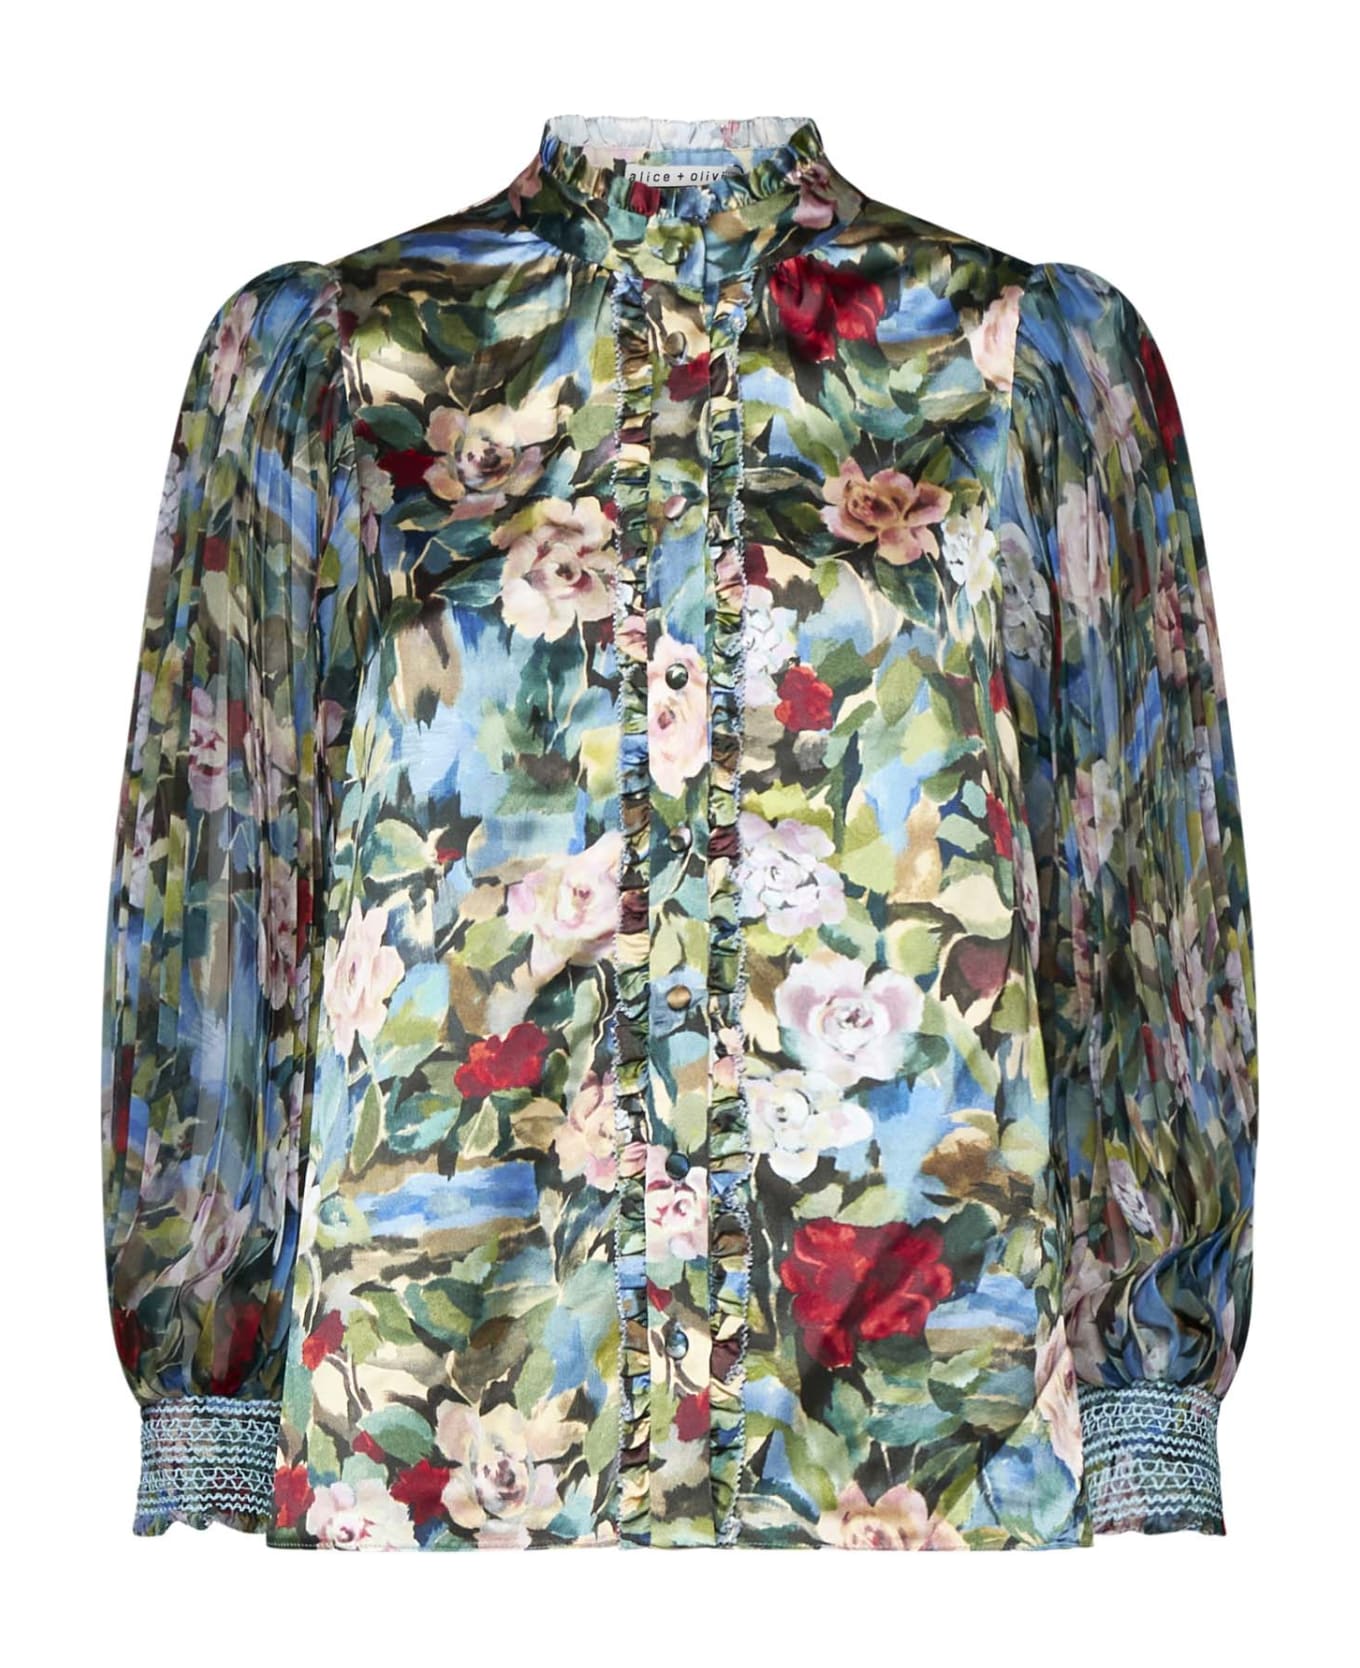 Alice + Olivia Shirt - Breeze floral sm